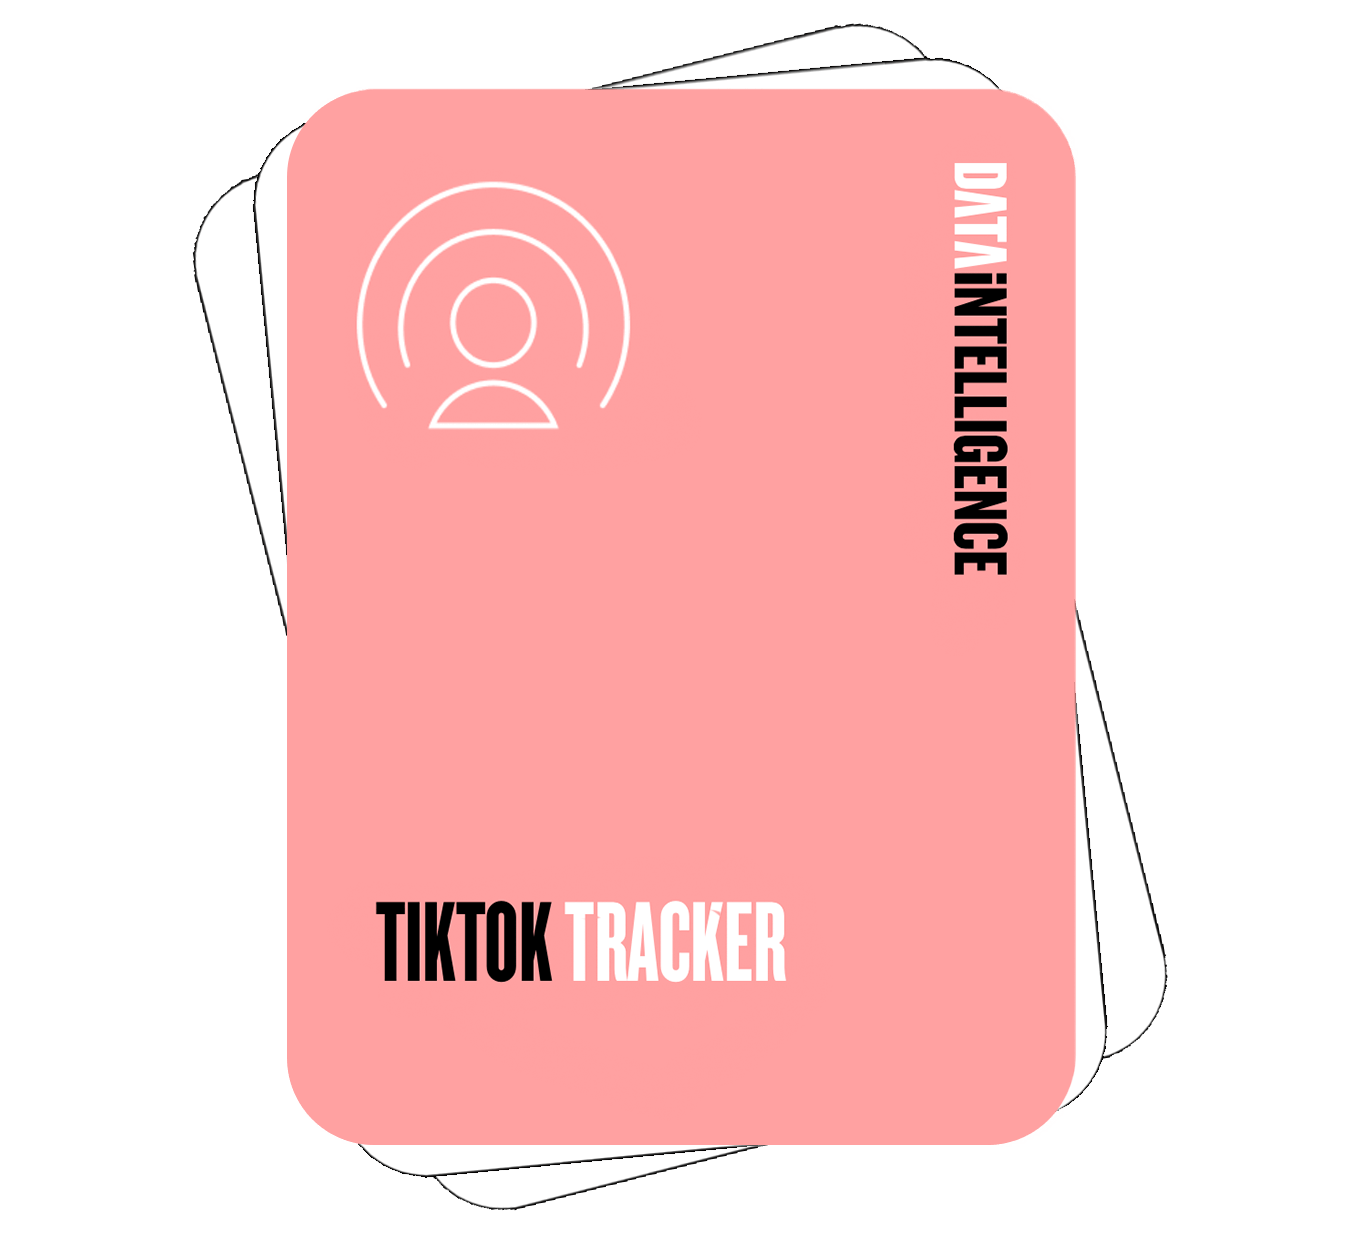 Discover TikTok Tracker. Developed for tracking, measuring, and analyzing public TikTok data.